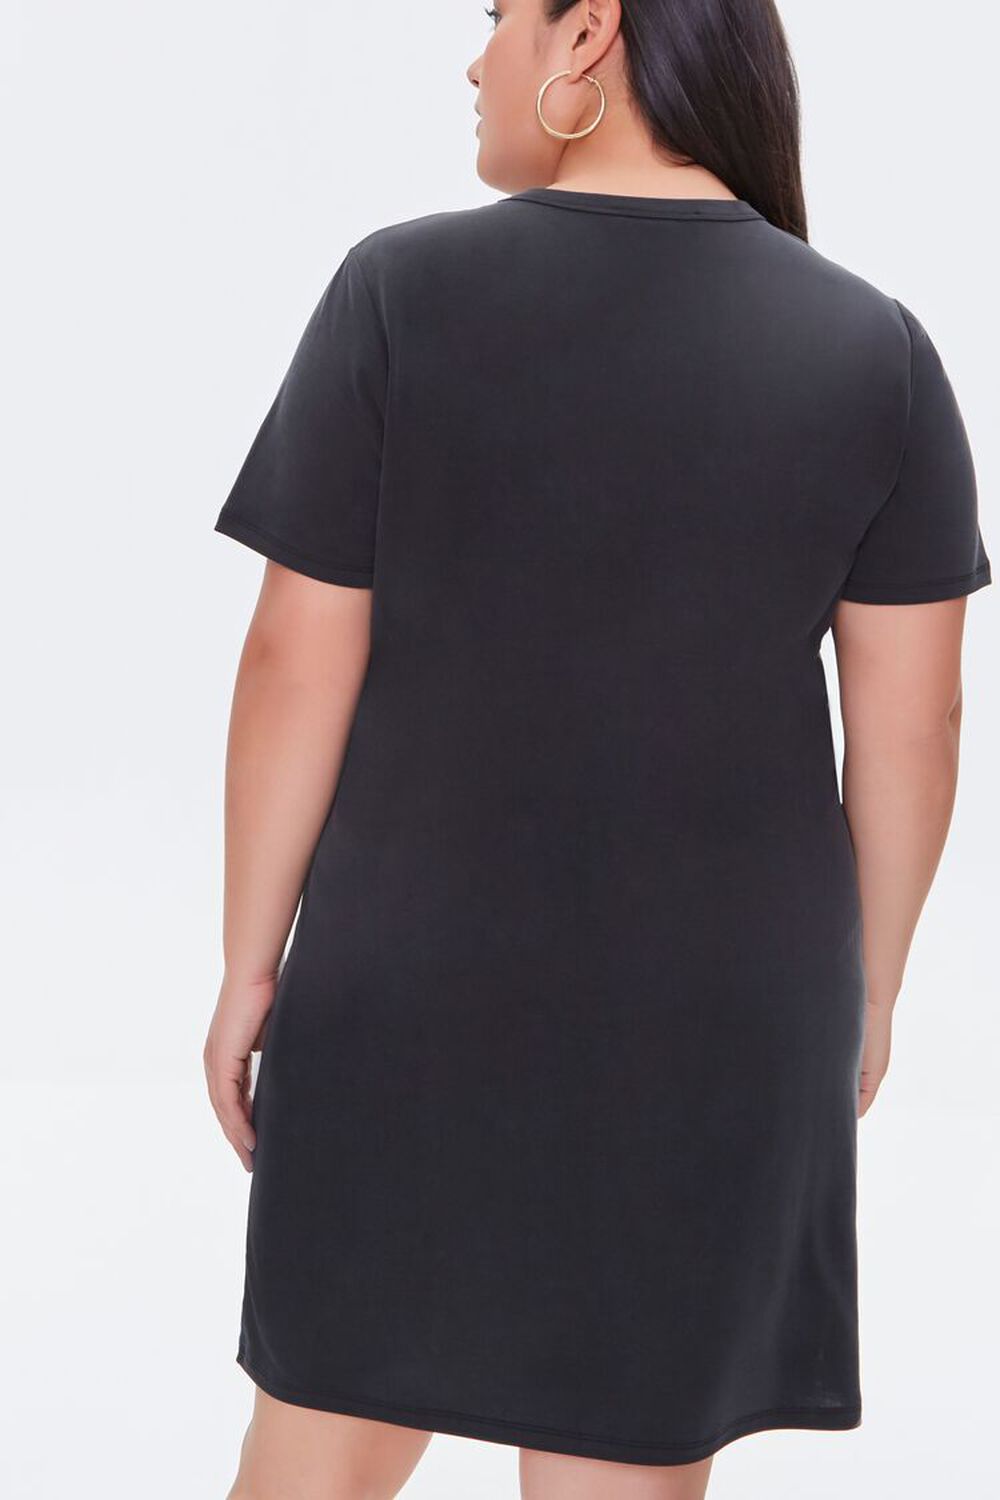 BLACK Plus Size Cutout T-Shirt Dress, image 3